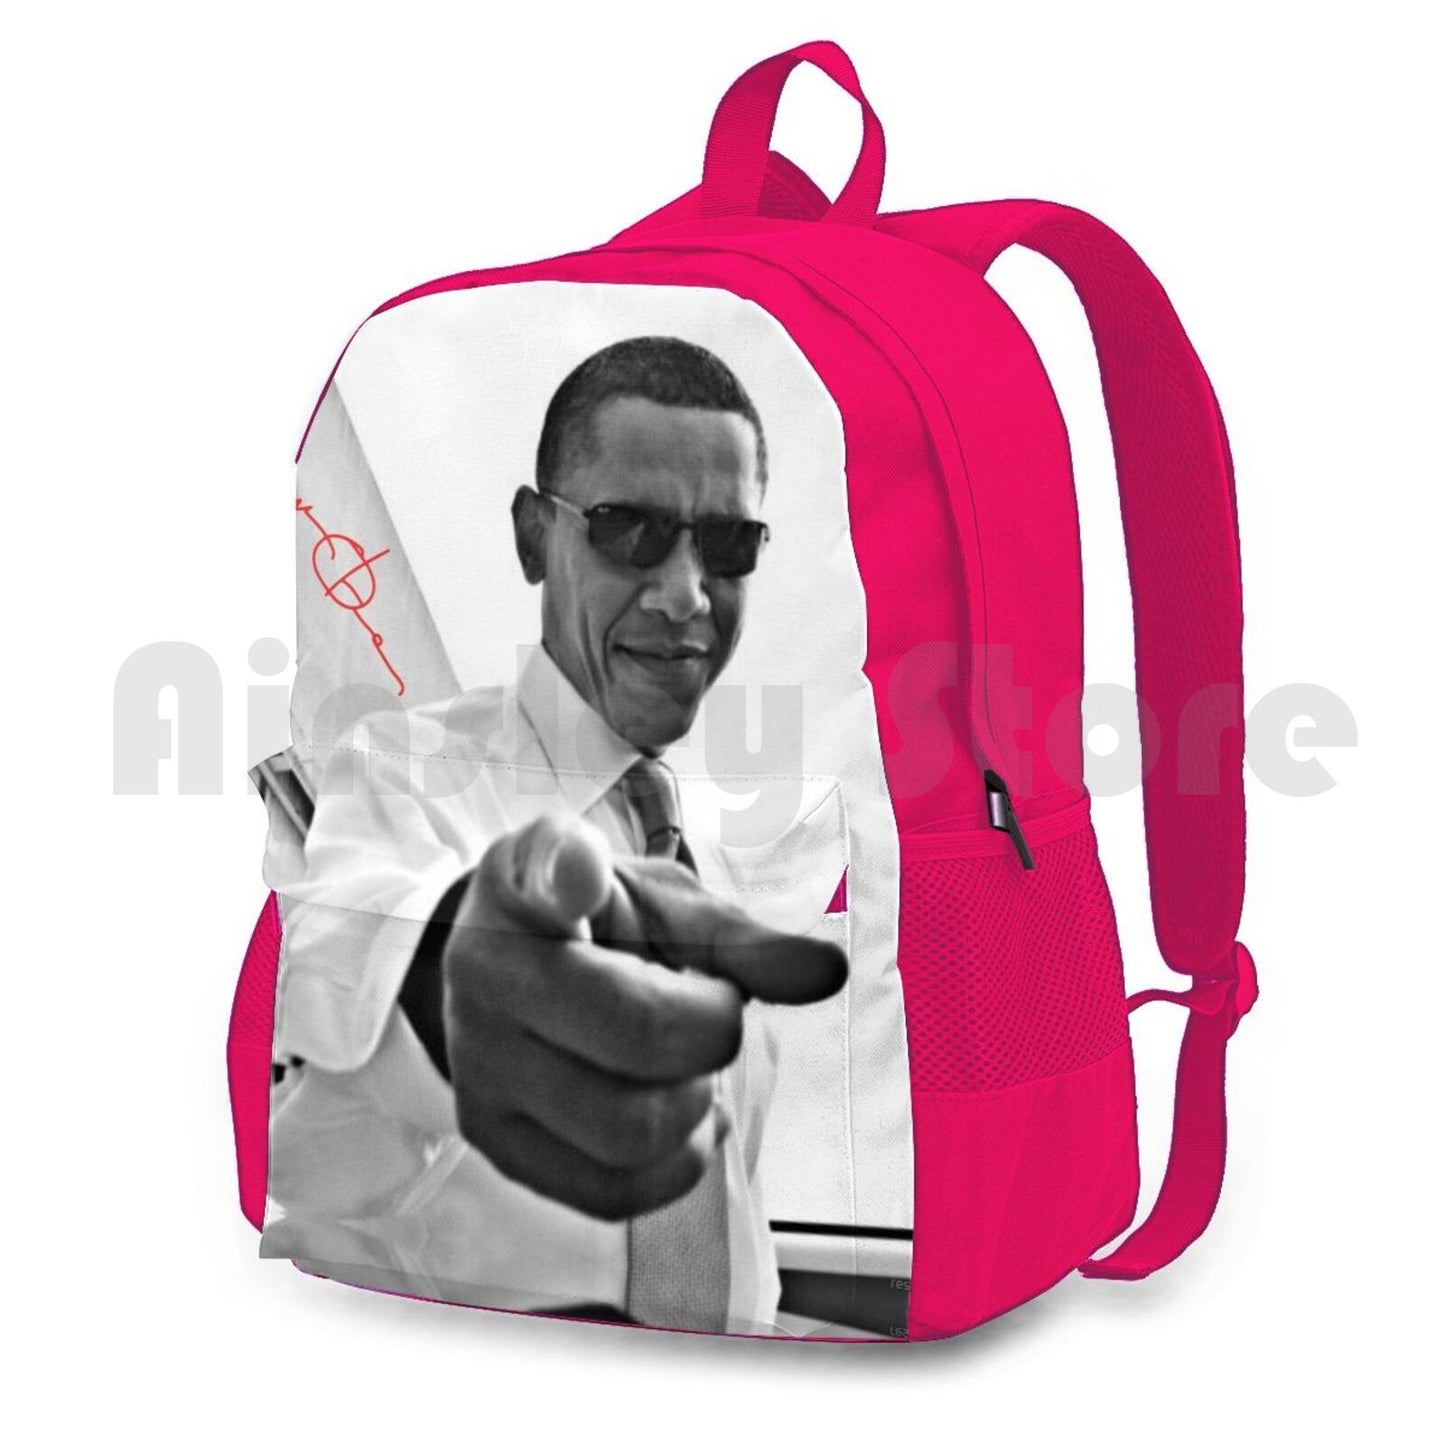 Obama Outdoor Hiking Backpack Waterproof Camping Travel Obama Barack Obama President Cool Fun